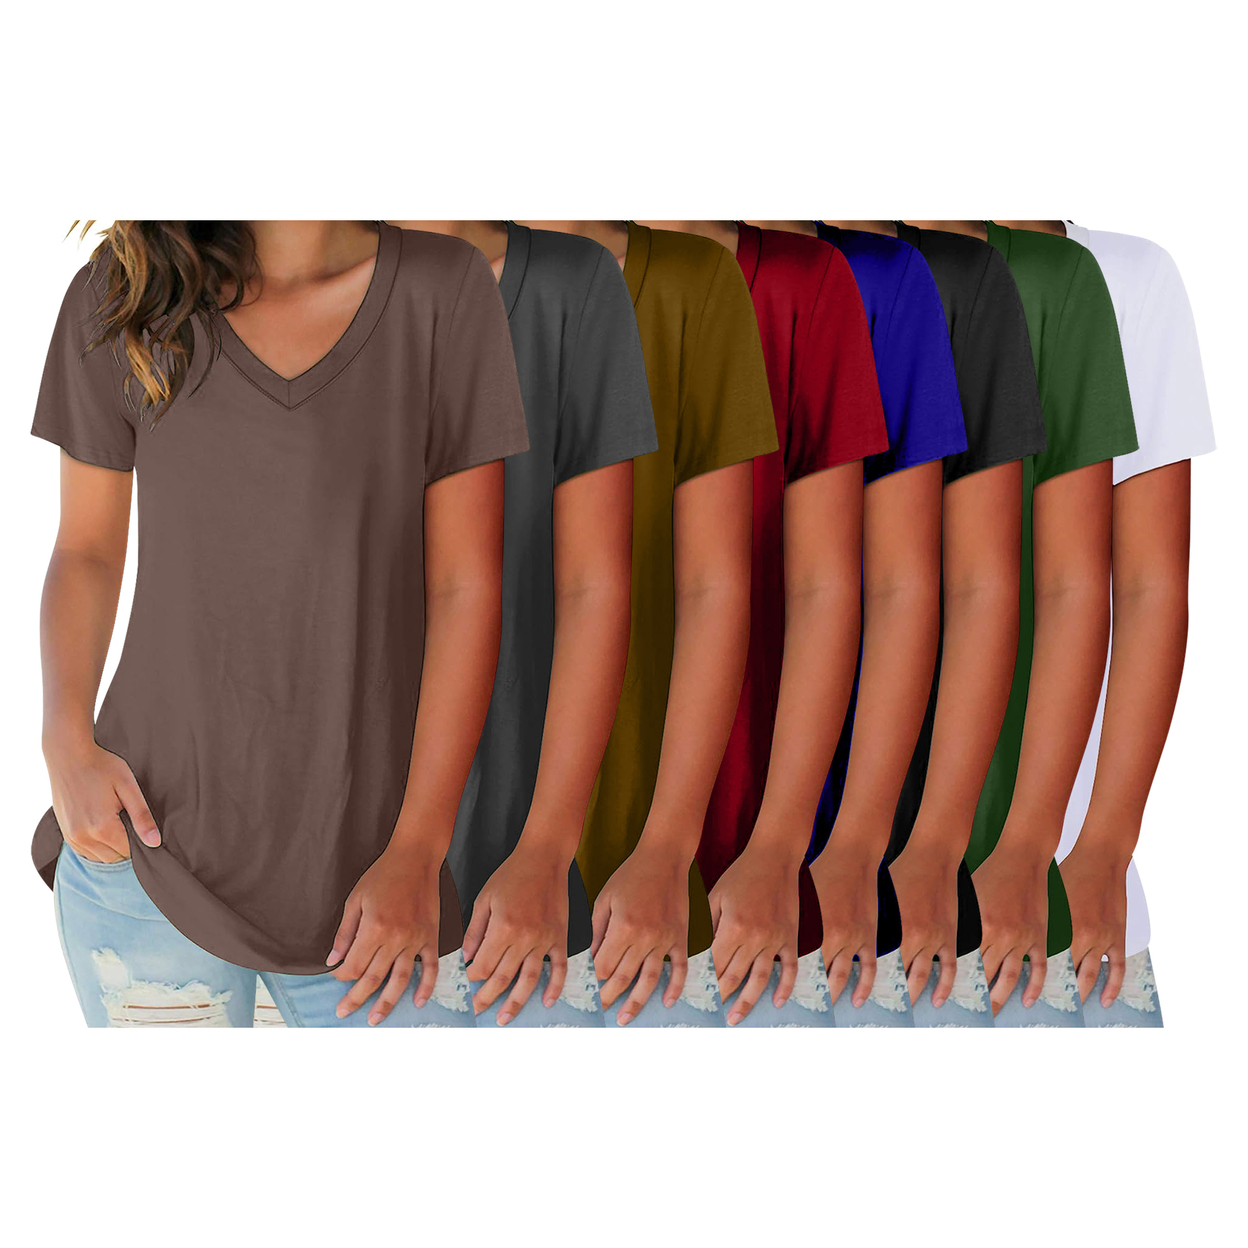 2-Pack: Women's Ultra Soft Smooth Cotton Blend Basic V-Neck Short Sleeve Shirts - Grey & Brown, Xx-large